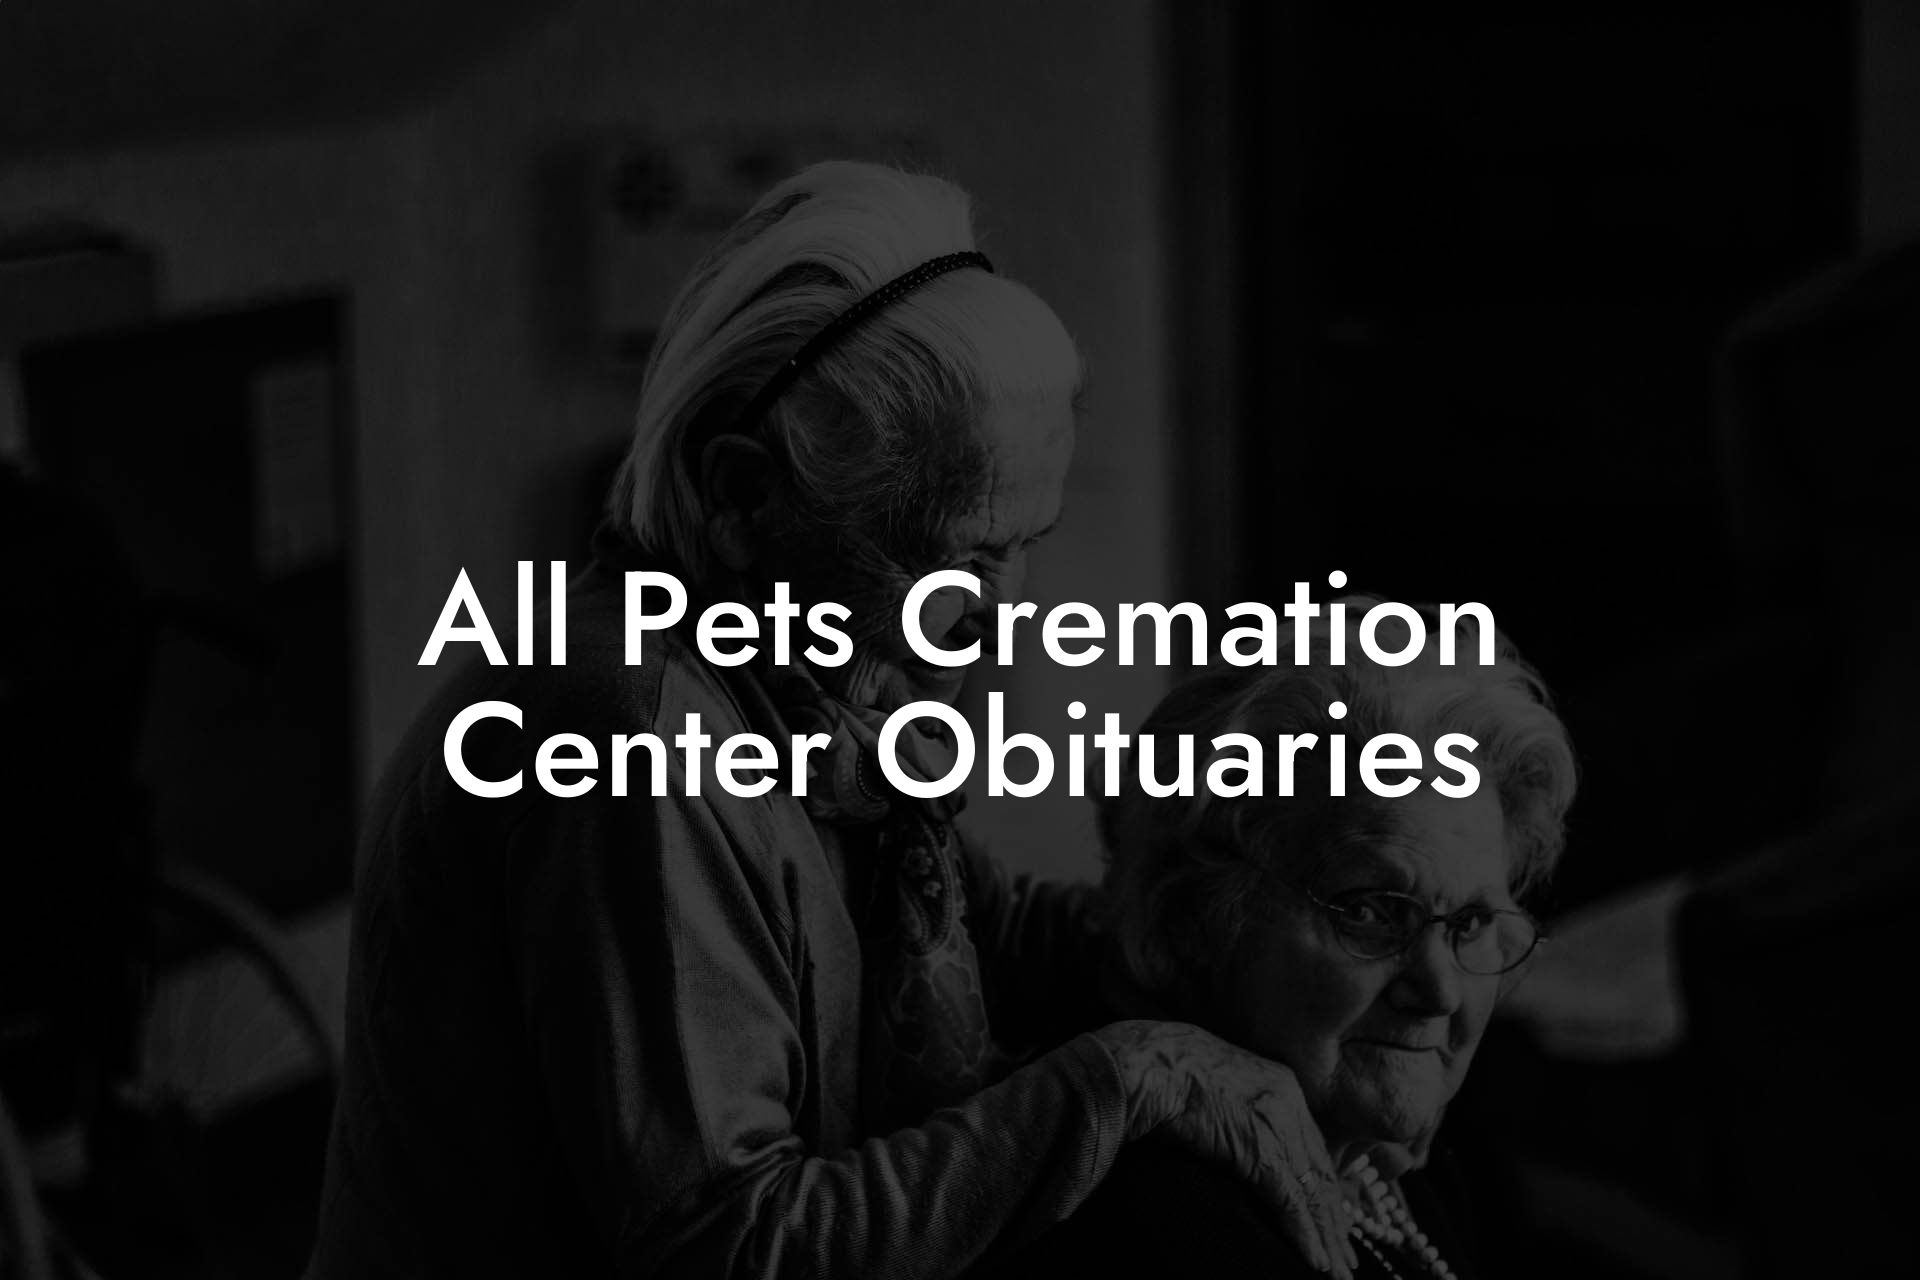 All Pets Cremation Center Obituaries